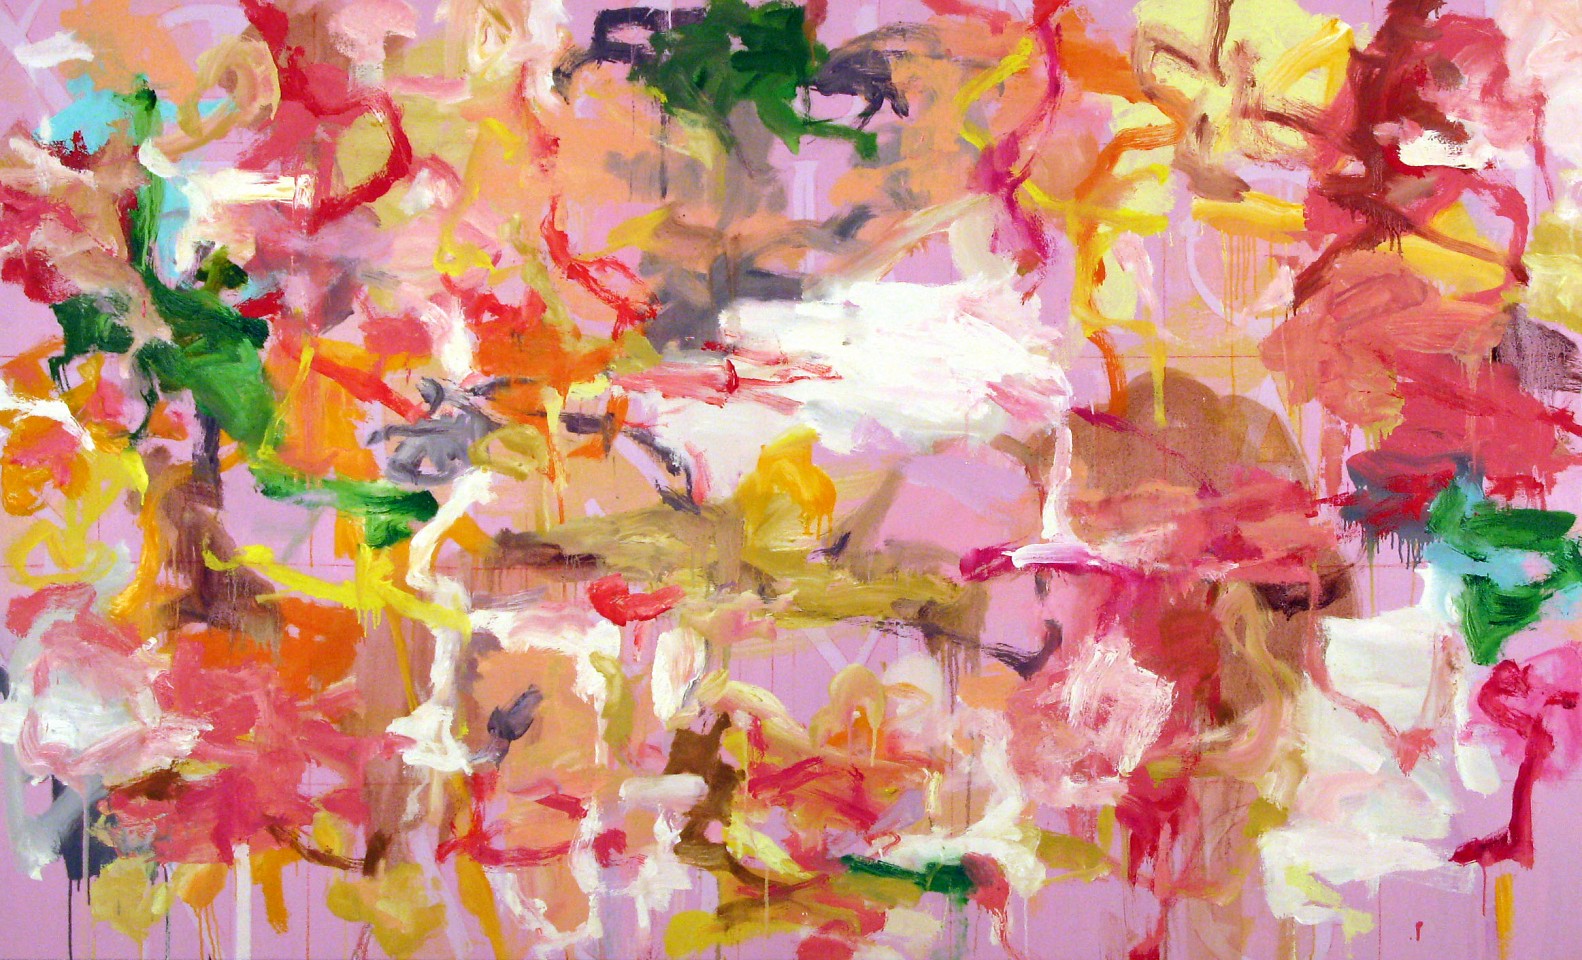 Kikuo Saito, Cerise, 2009
Oil on Canvas, 45 3/4 x 75 3/4 in. (116.2 x 192.4 cm)
SAIT0004